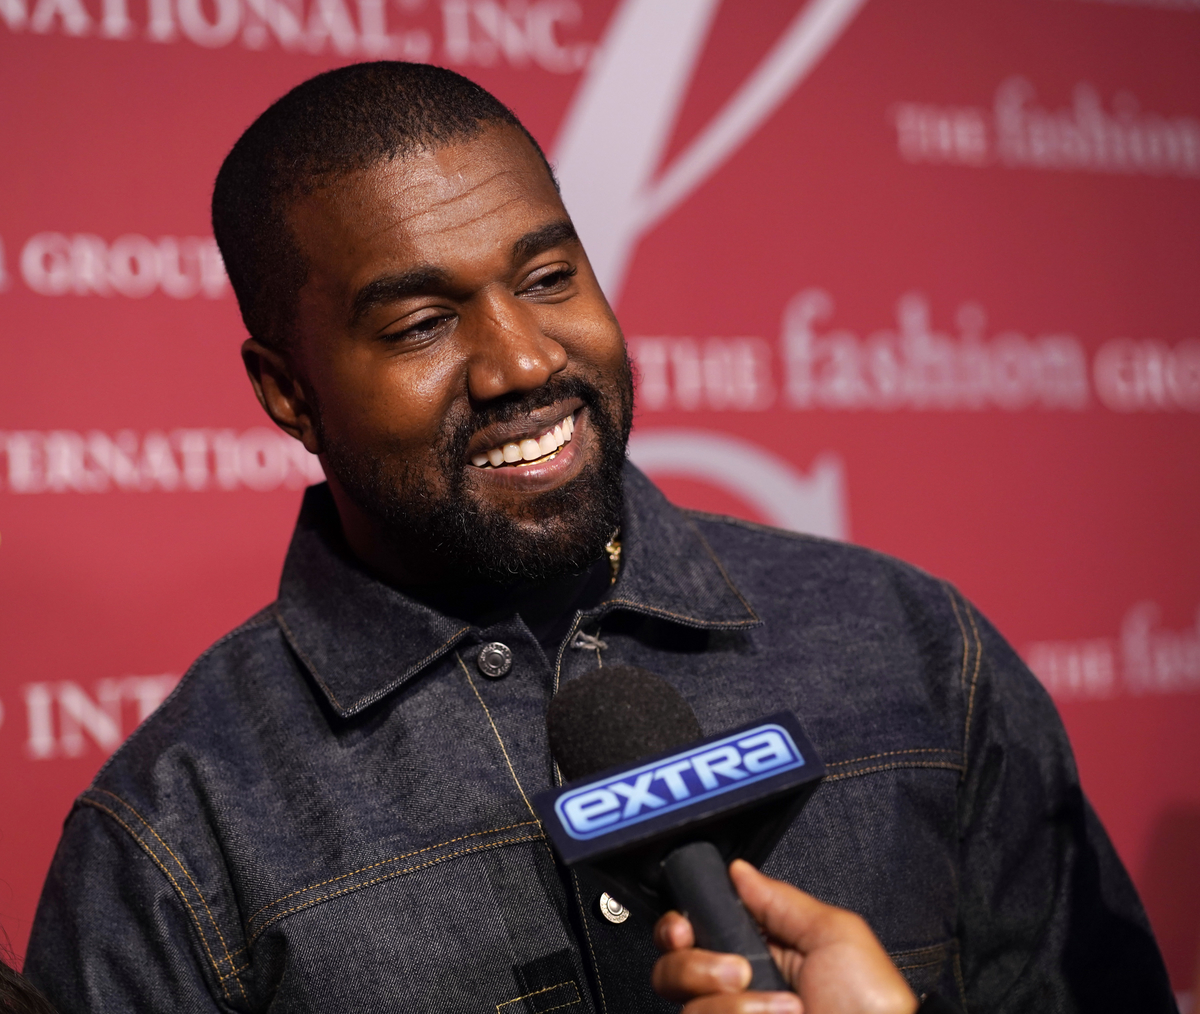 2022 Billboard Music Awards: Kanye “Ye” West Wins 6 Awards in Christian and Gospel Categories